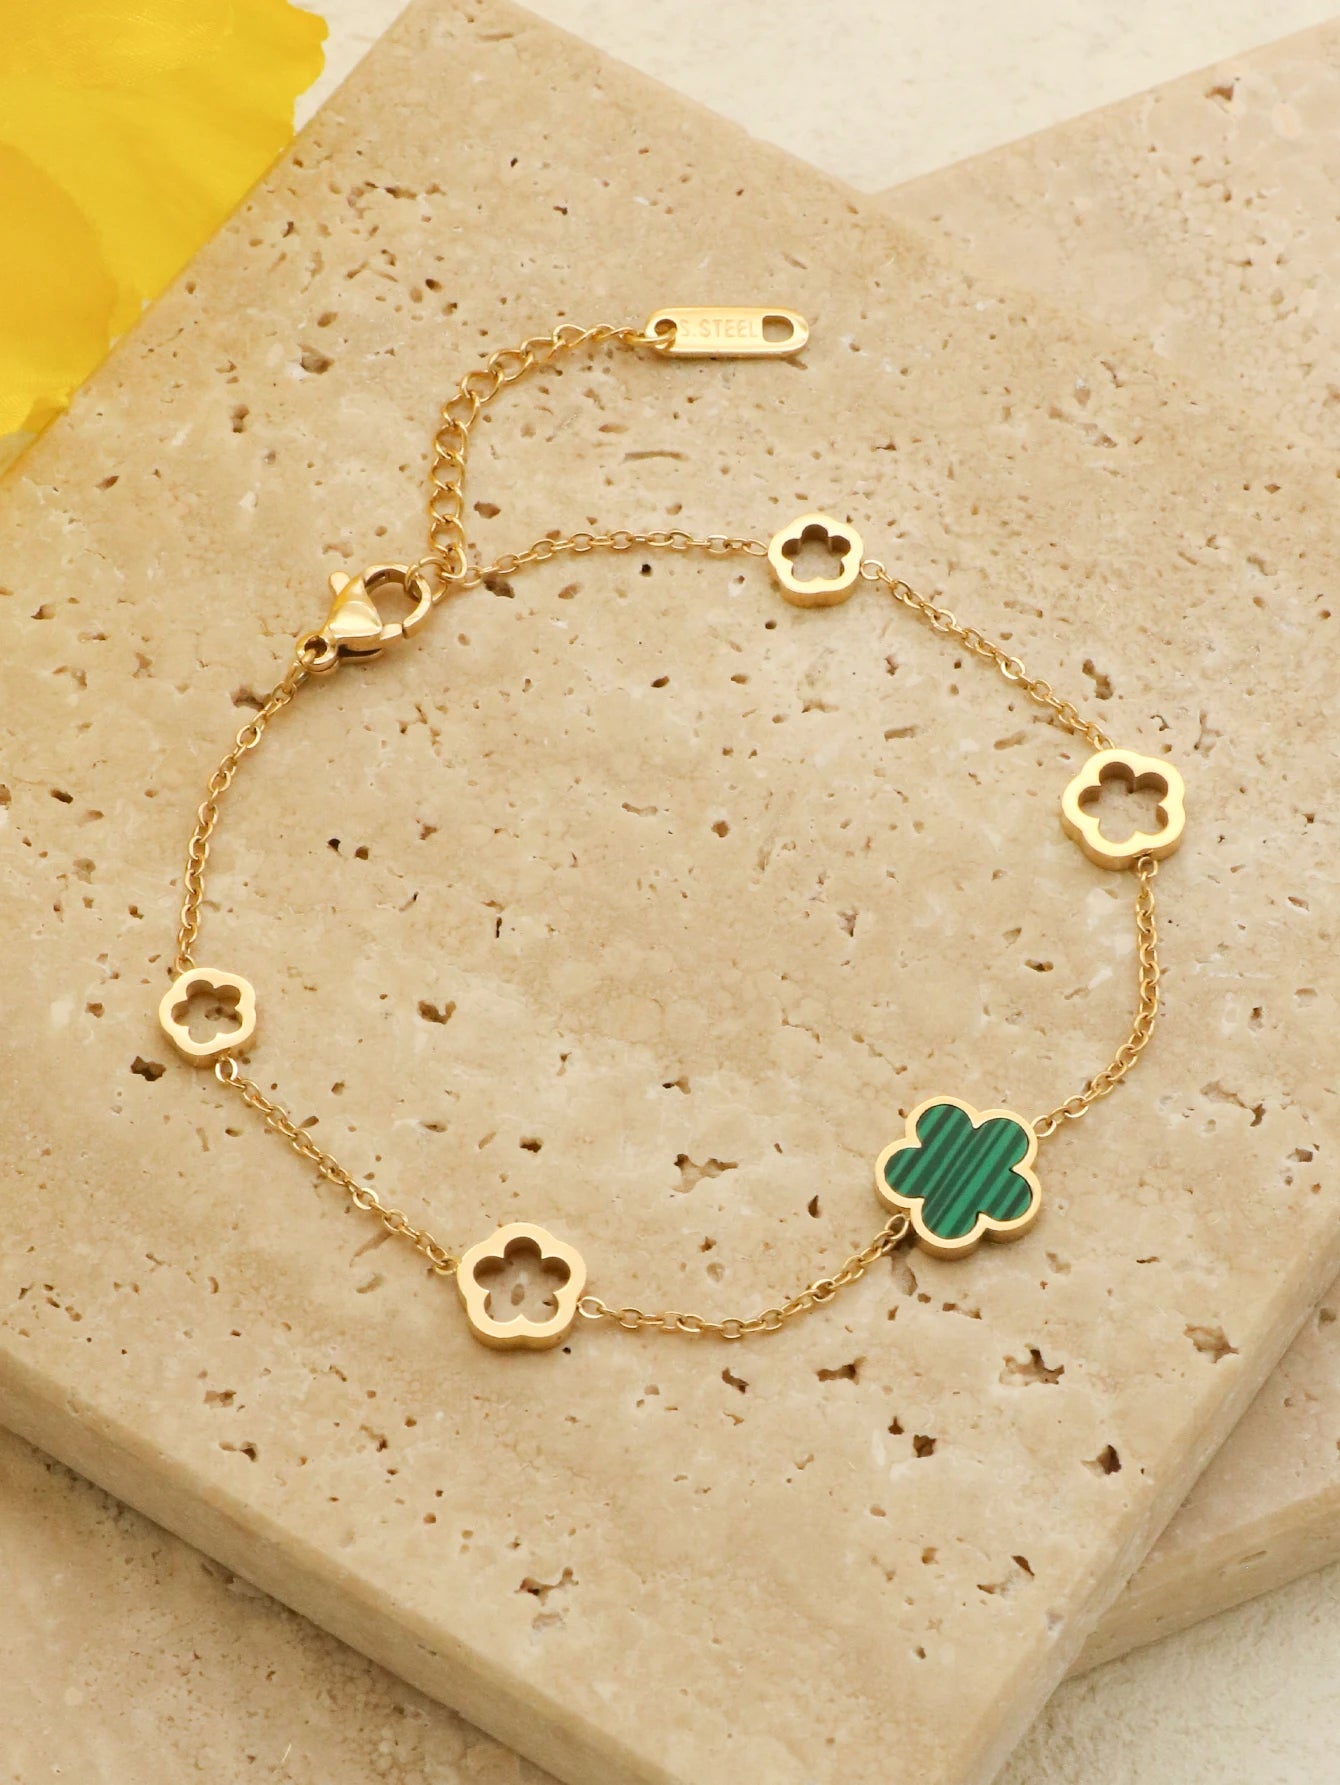 Bracelet For Women Original Design Bangle Jewelry